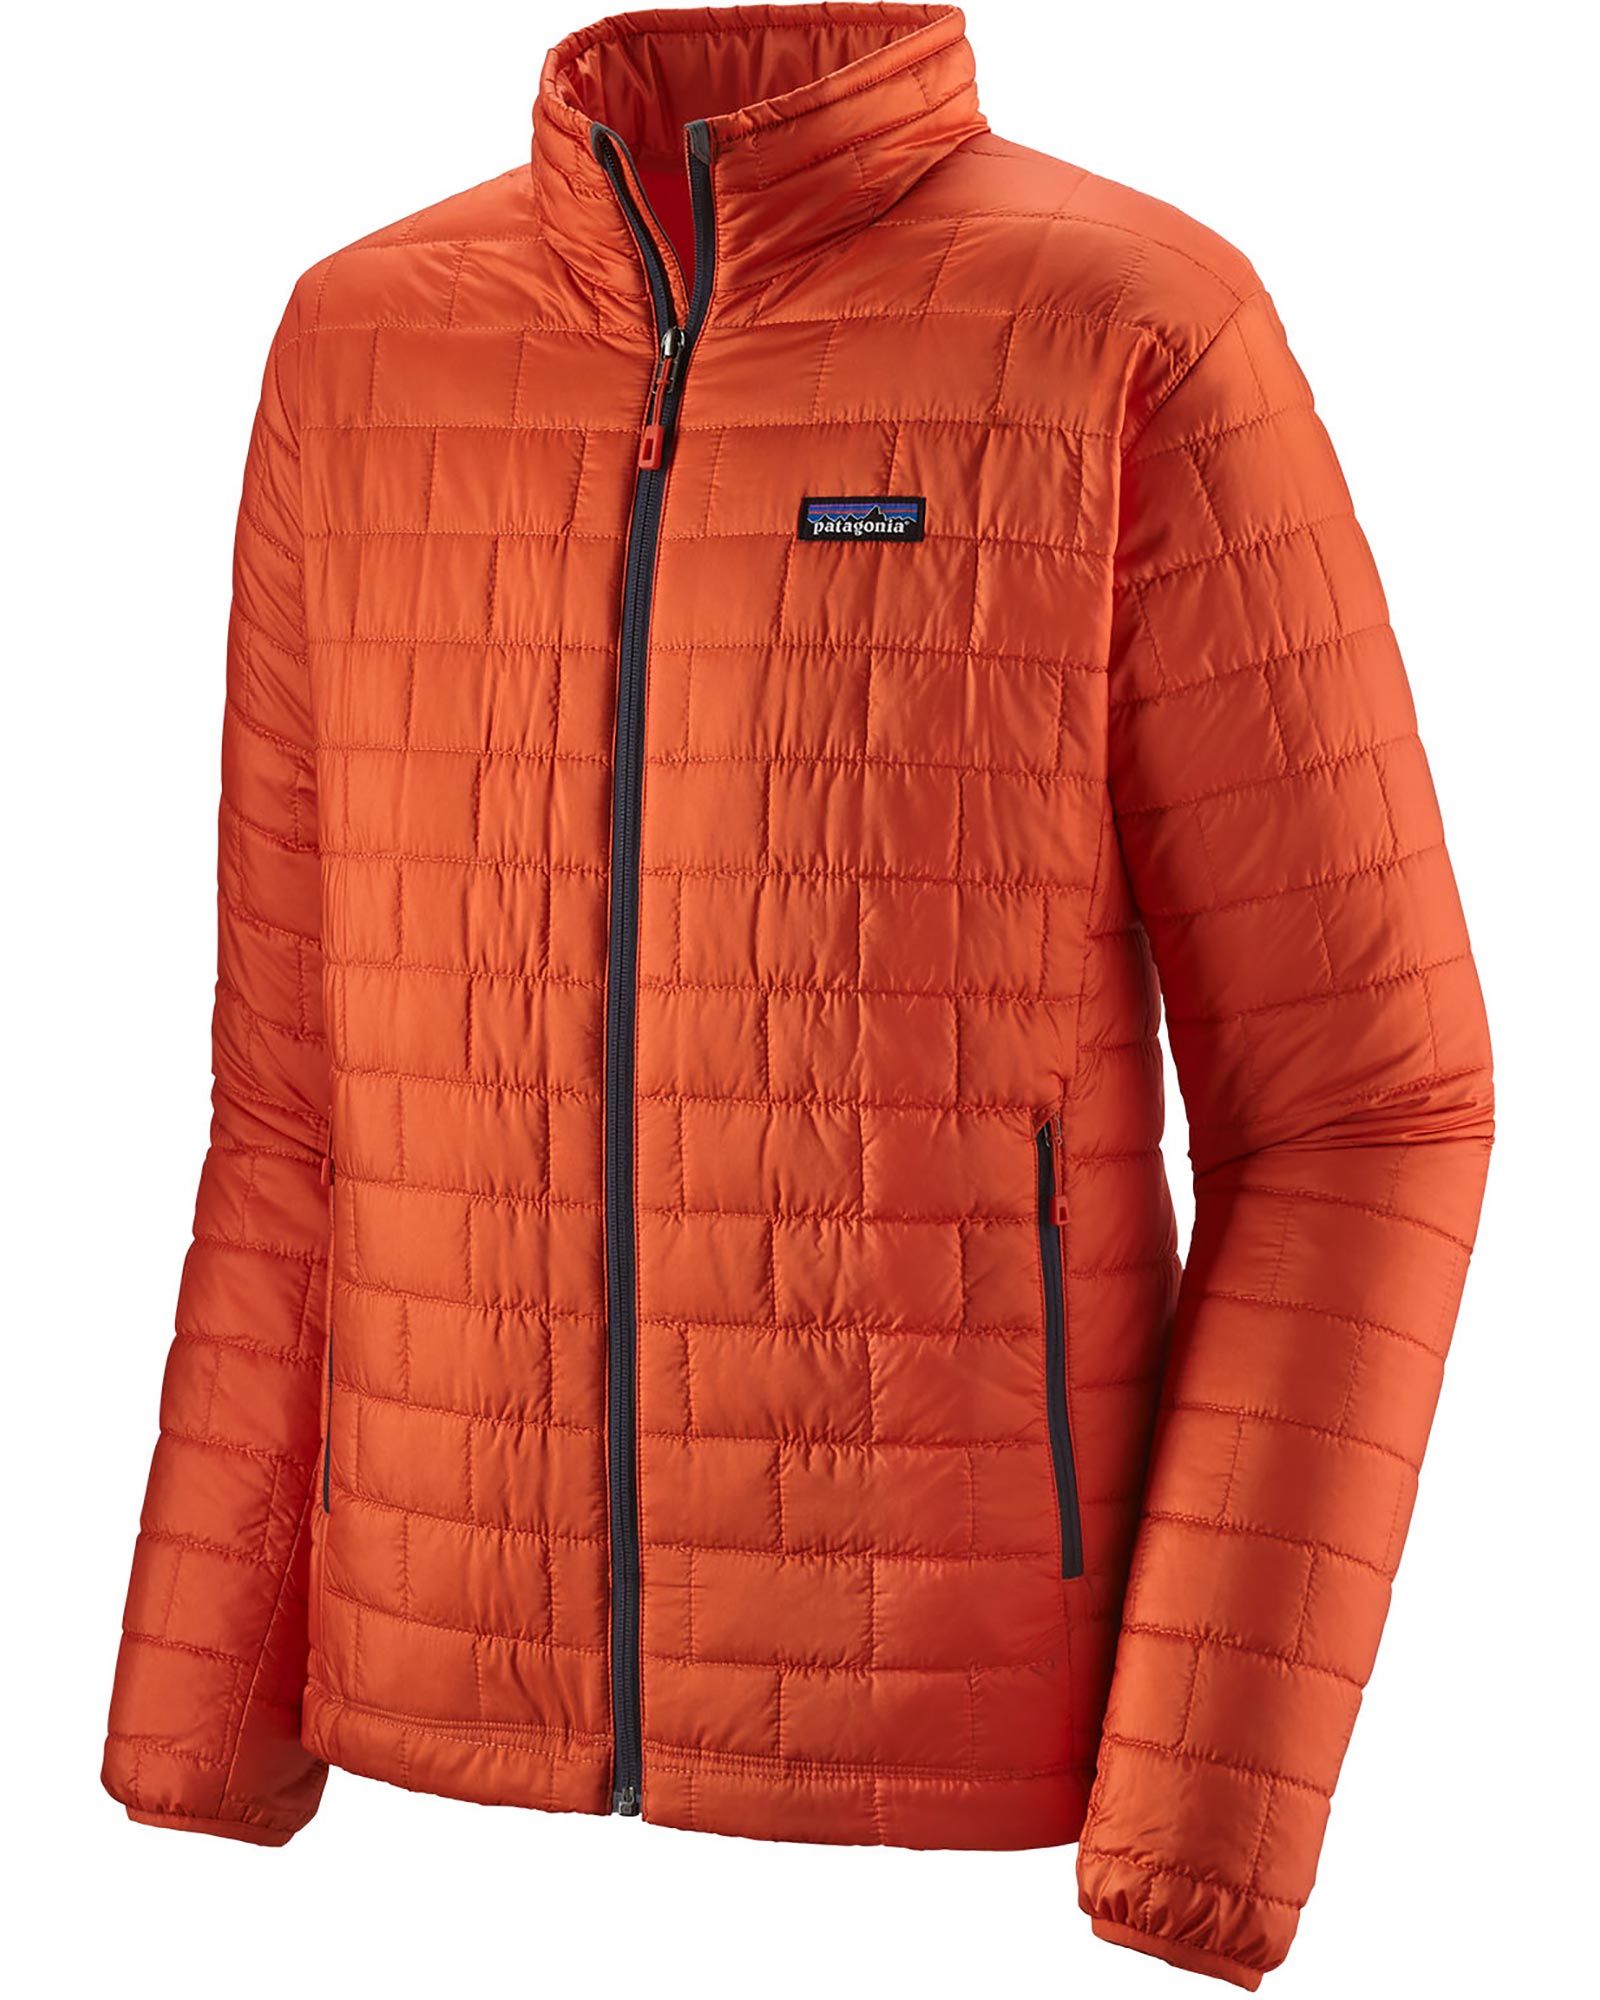 Patagonia Nano Puff Men’s Insulated Jacket - Metric Red XL